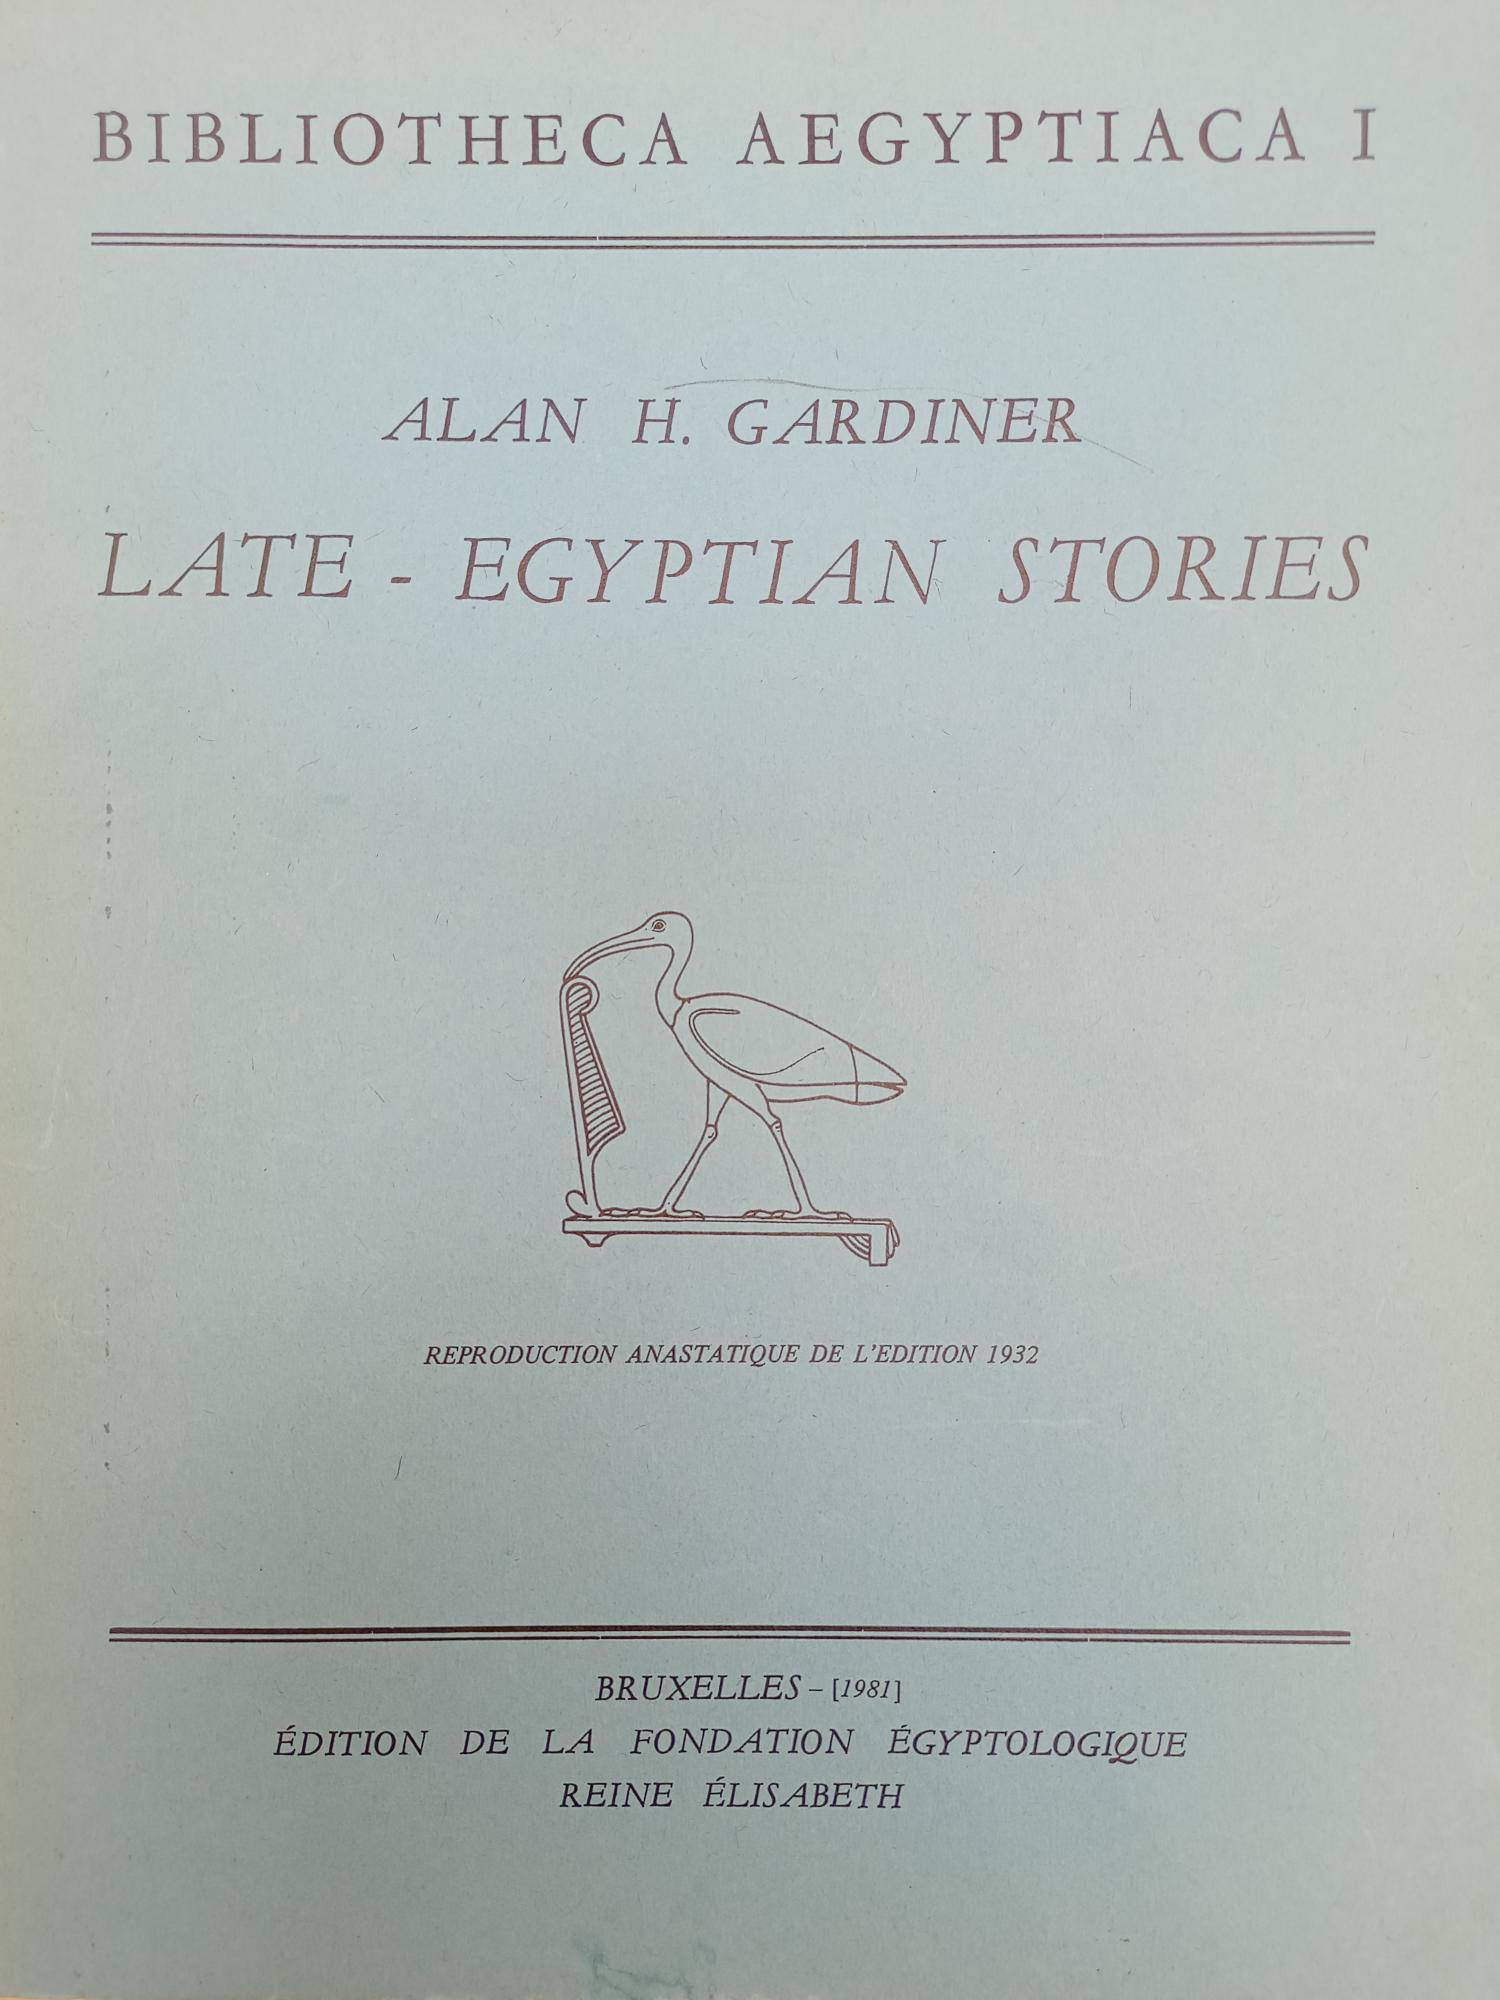 Late-Egyptian Stories. Bibliotheca Aegyptiaca I.